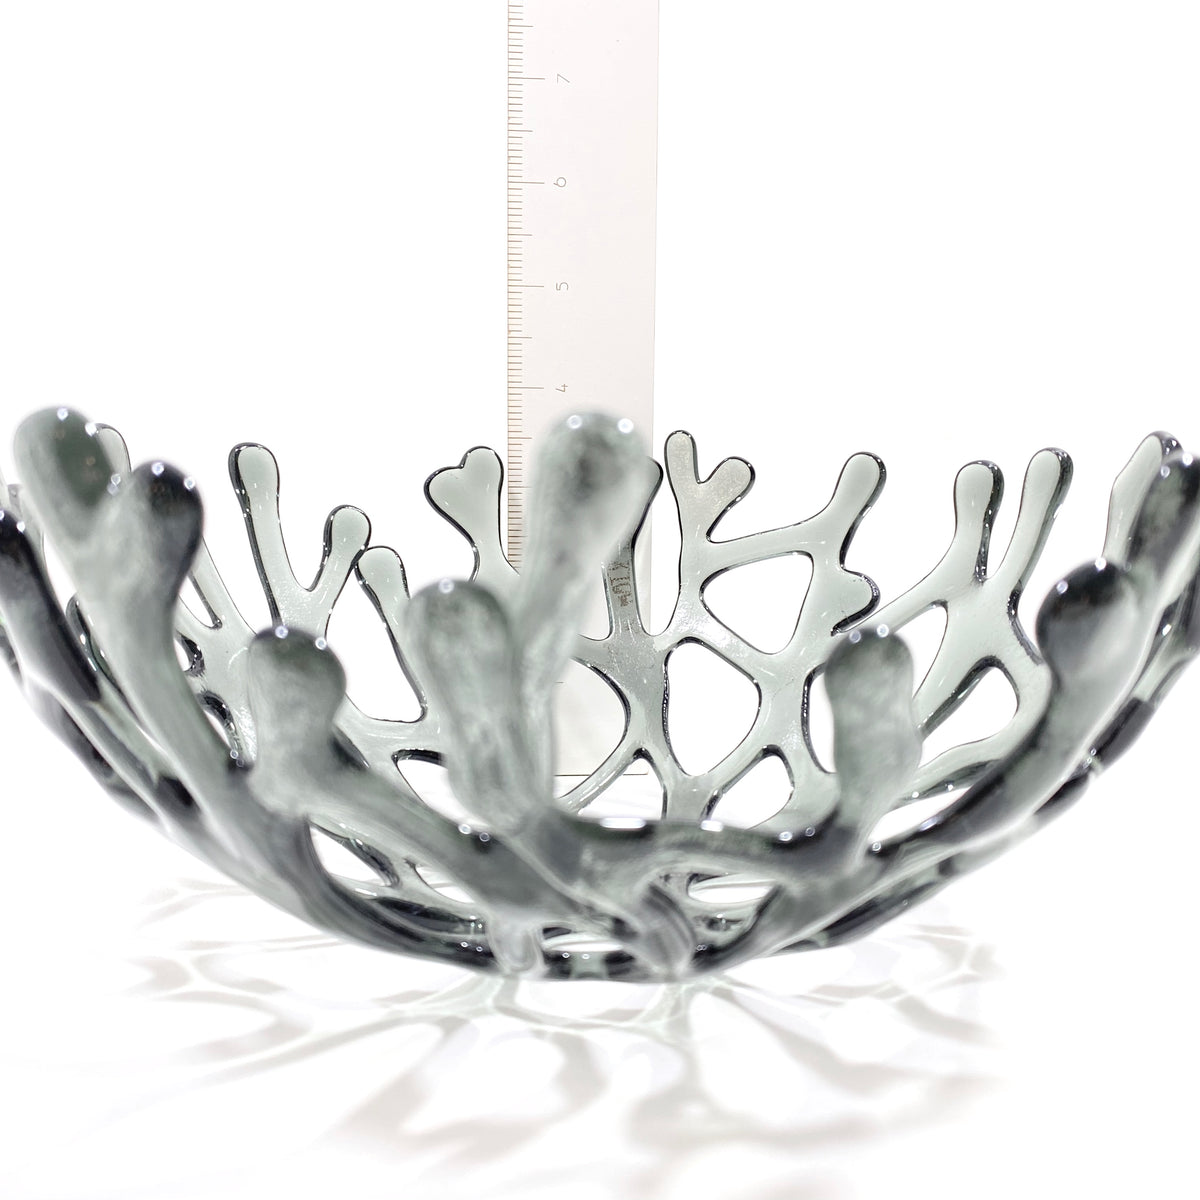 Coral Branch Bowl | Medium Gray Transparent Glass